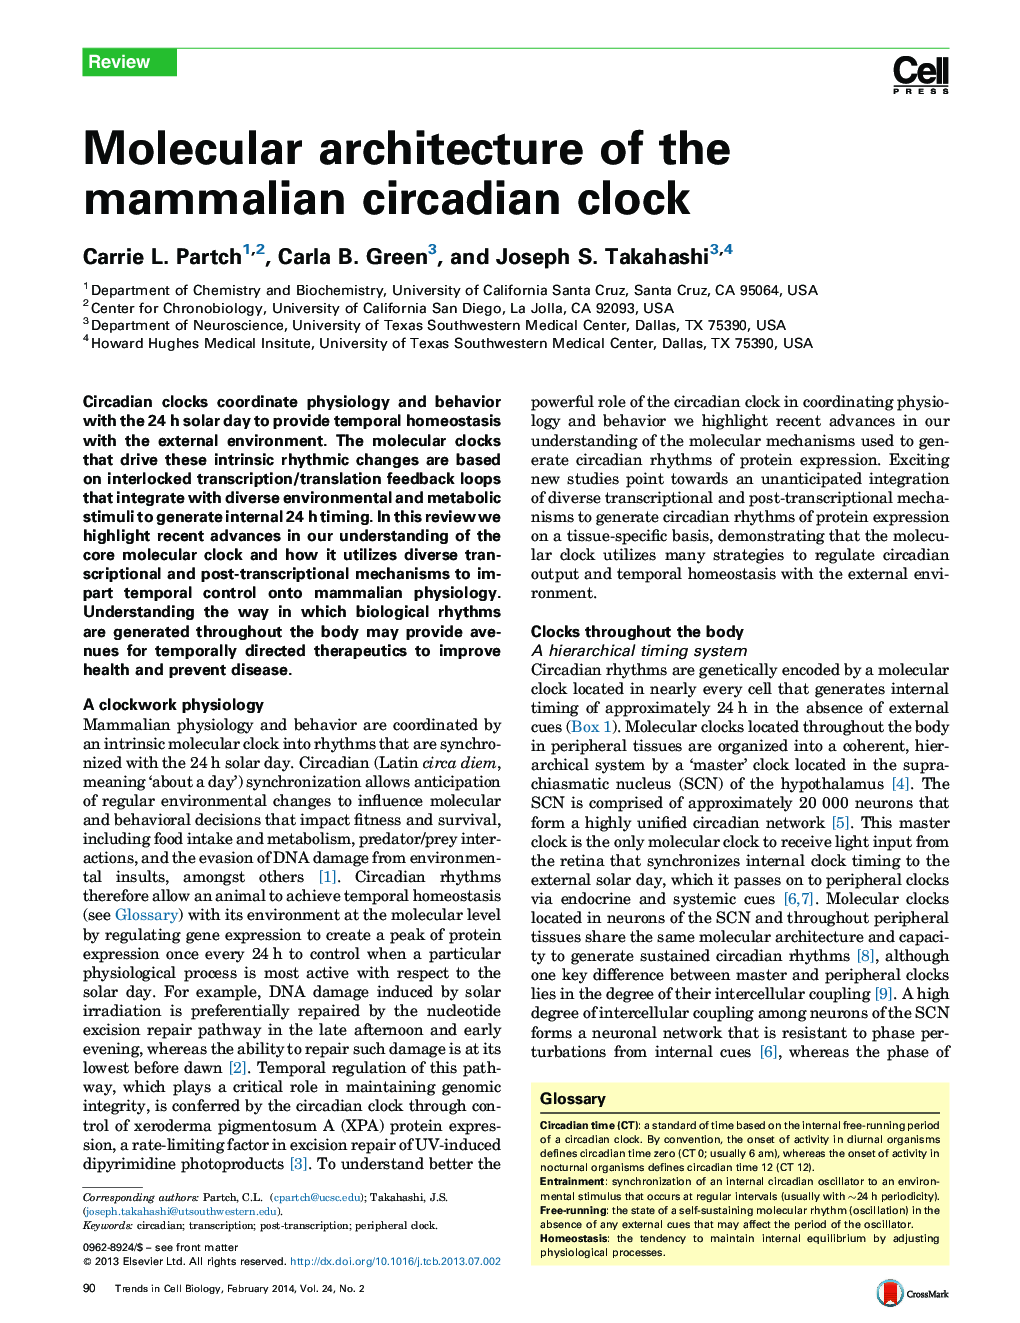 Molecular architecture of the mammalian circadian clock